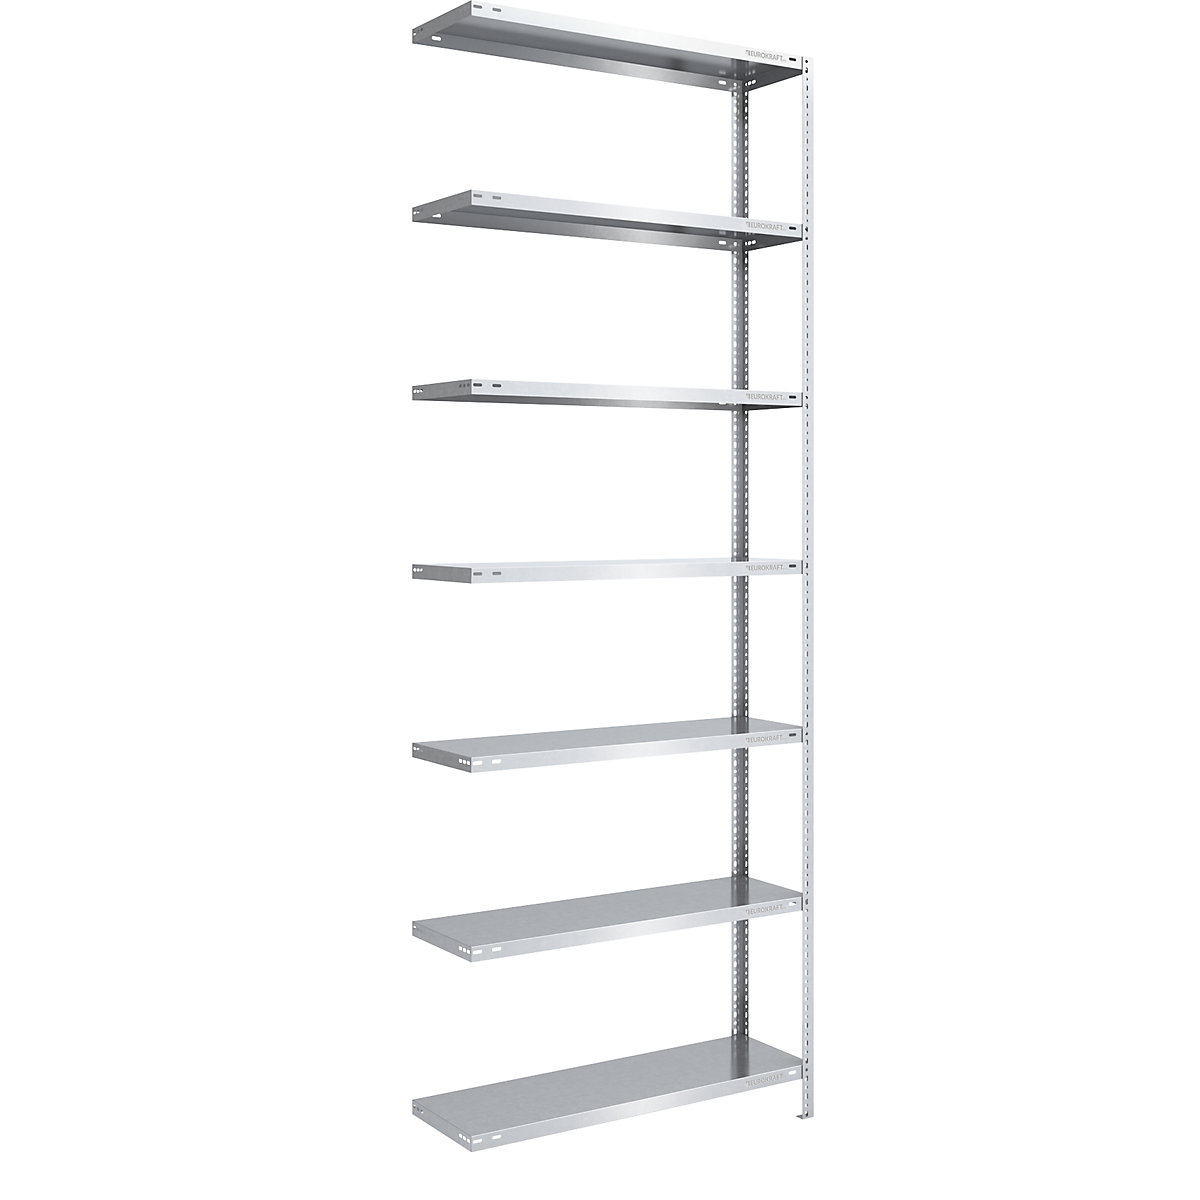 Bolt-together shelf unit, light duty, zinc plated – eurokraft pro, shelf unit height 3000 mm, shelf width 1000 mm, depth 400 mm, extension shelf unit-12